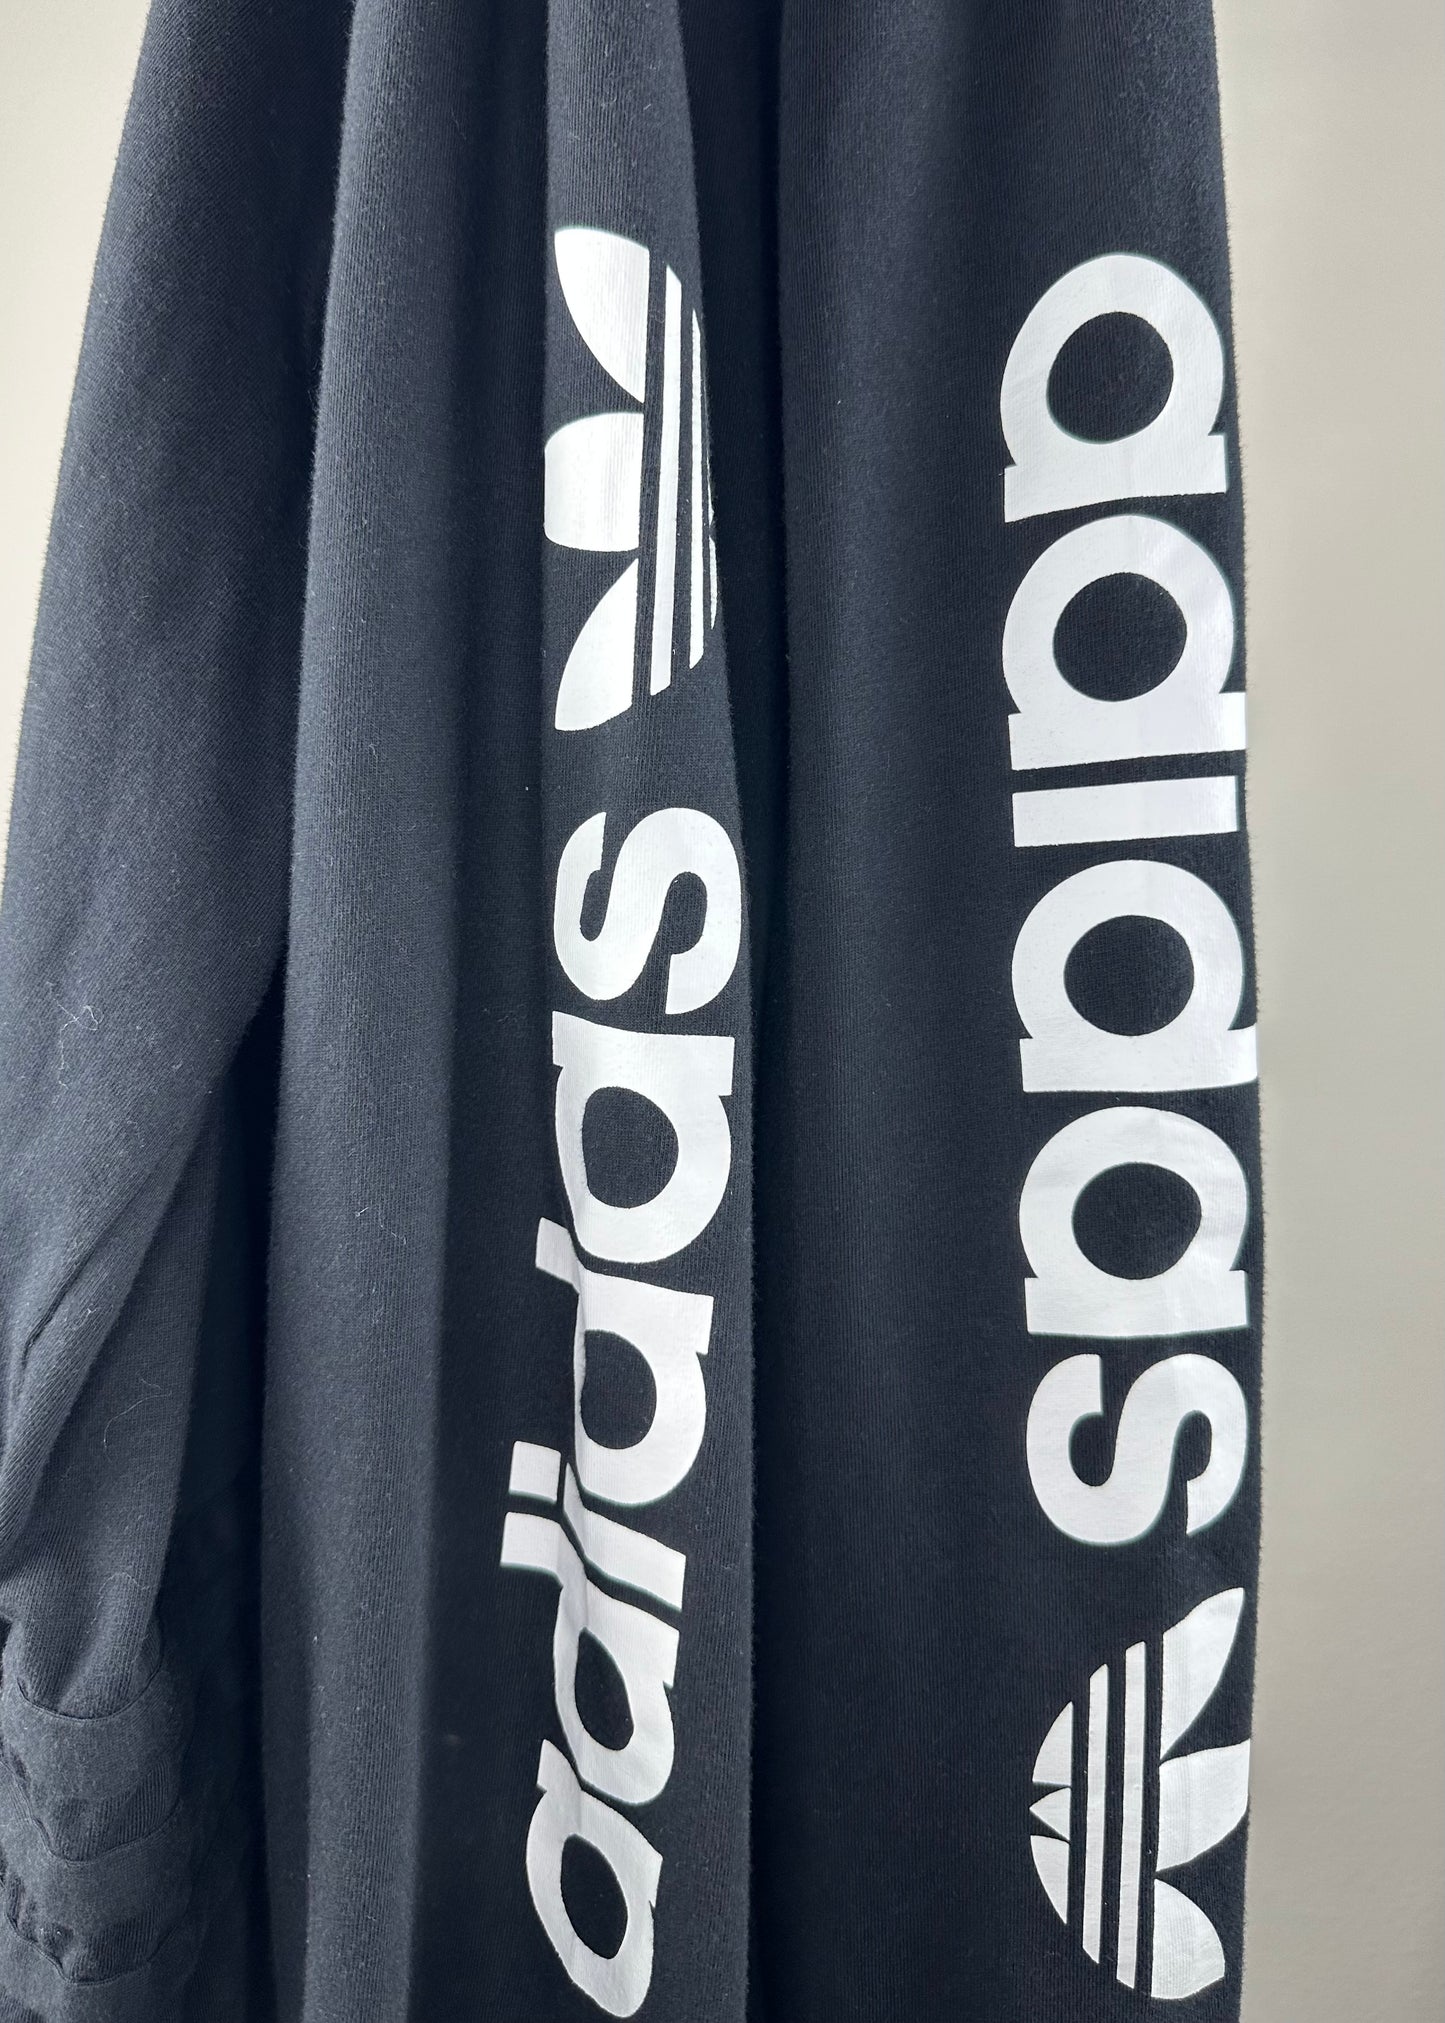 Black Long Sleeve Shirt By Adidas